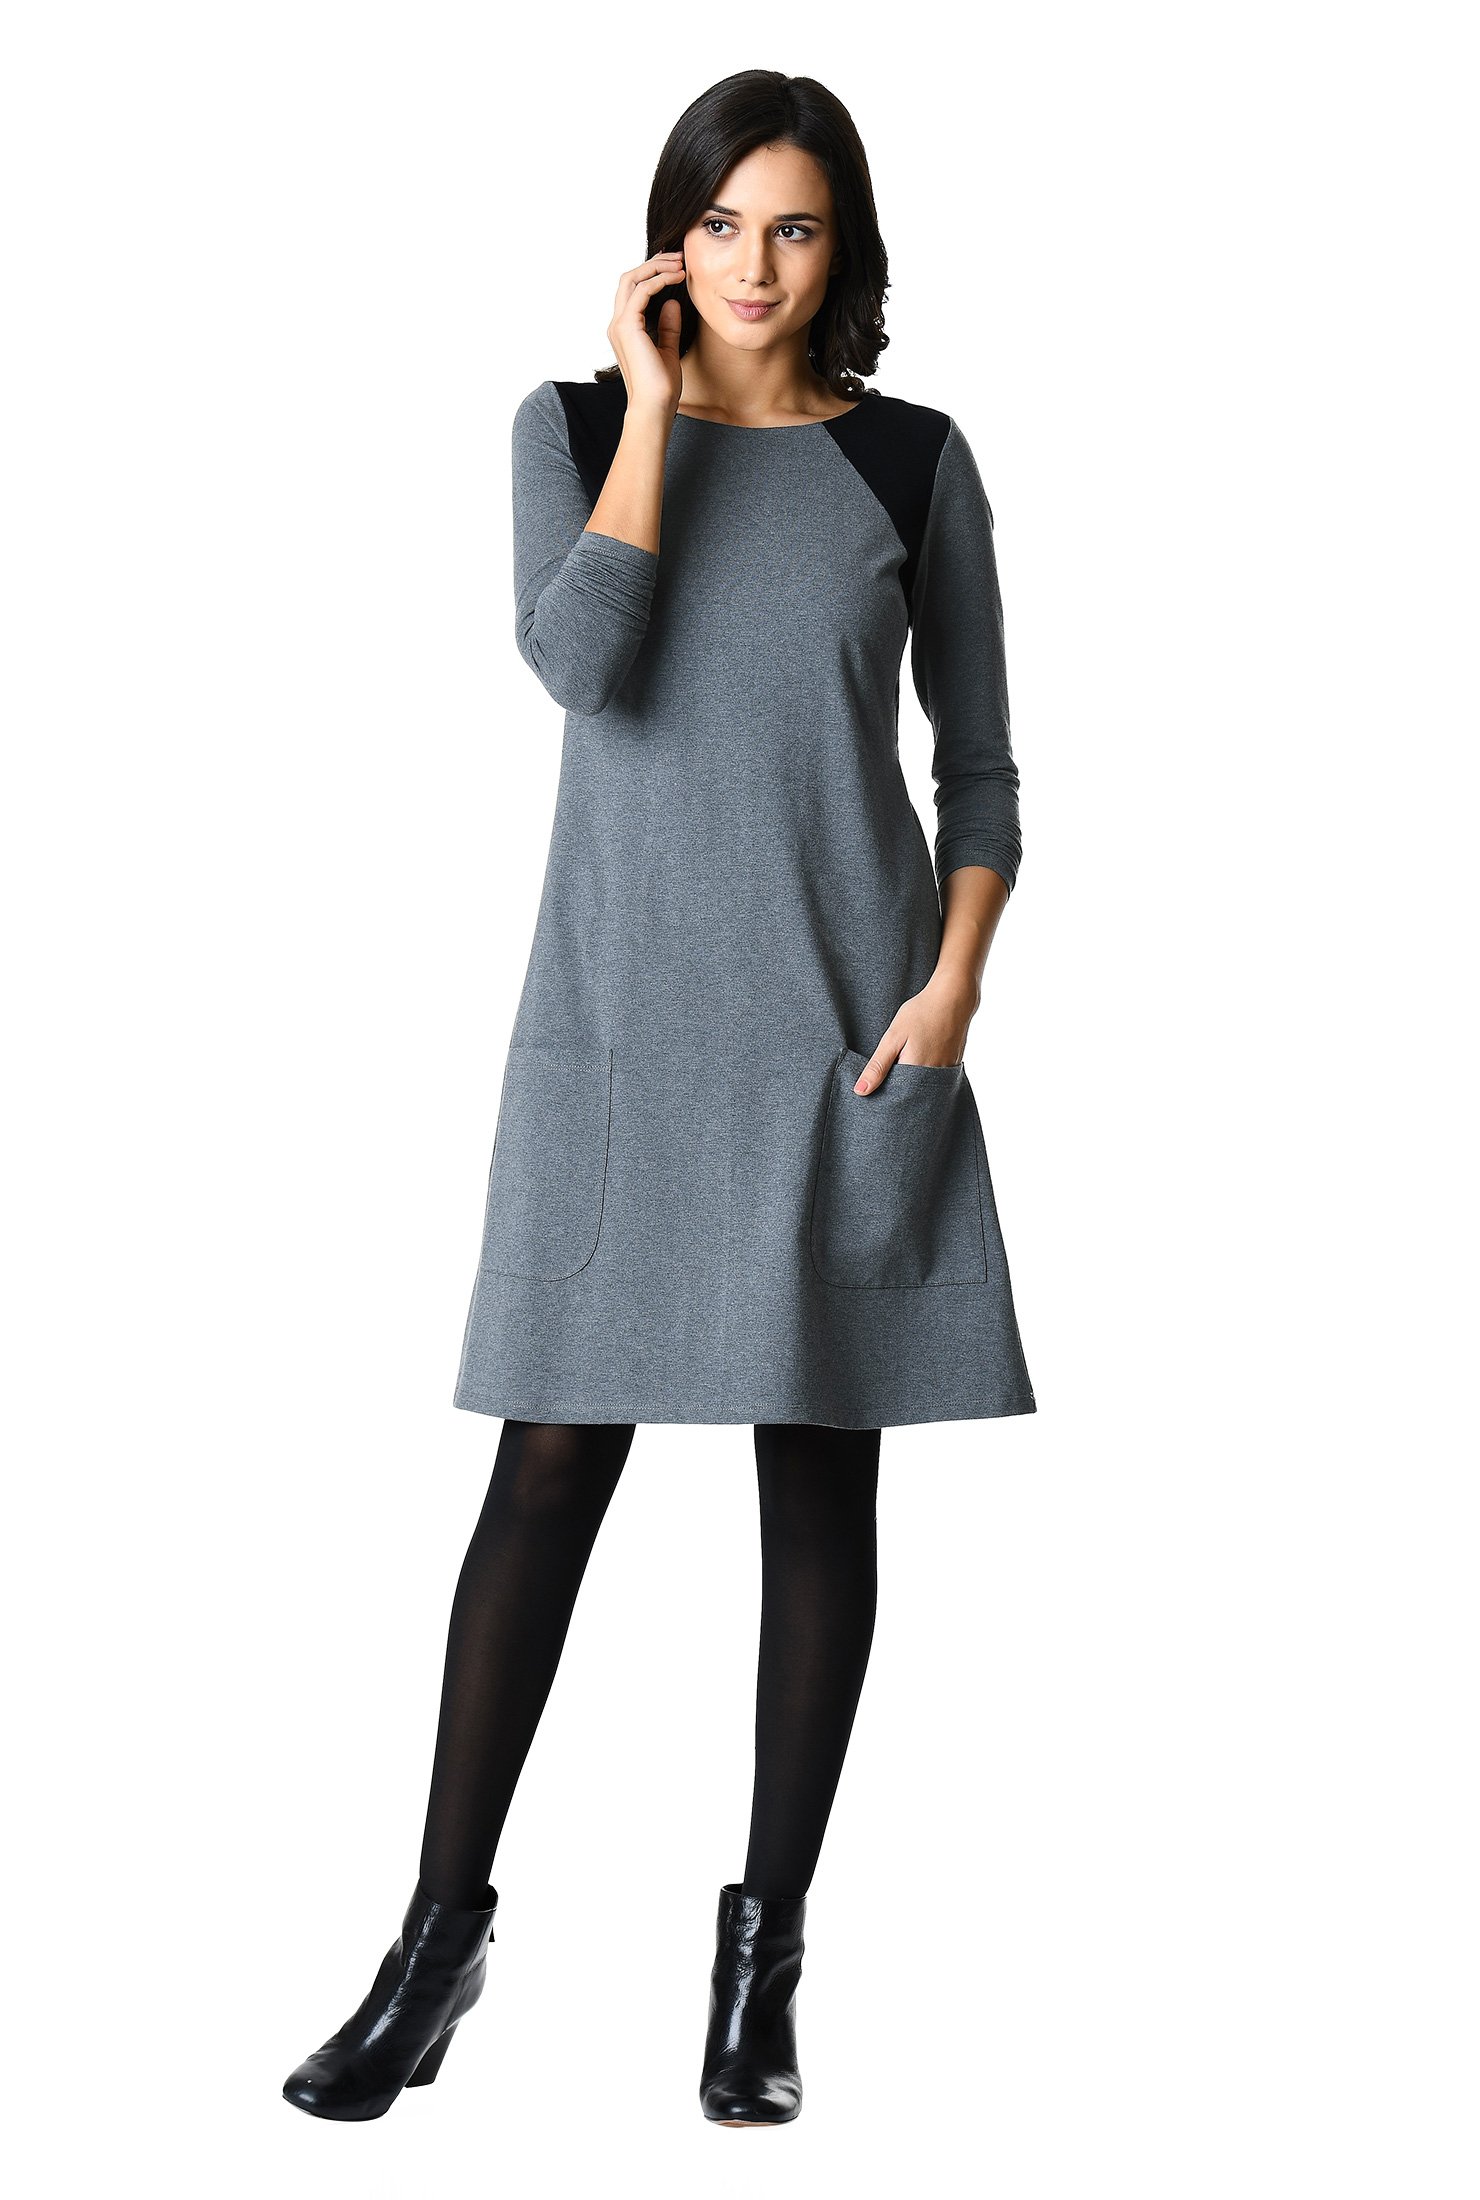 Shop Colorblock cotton knit shift dress | eShakti